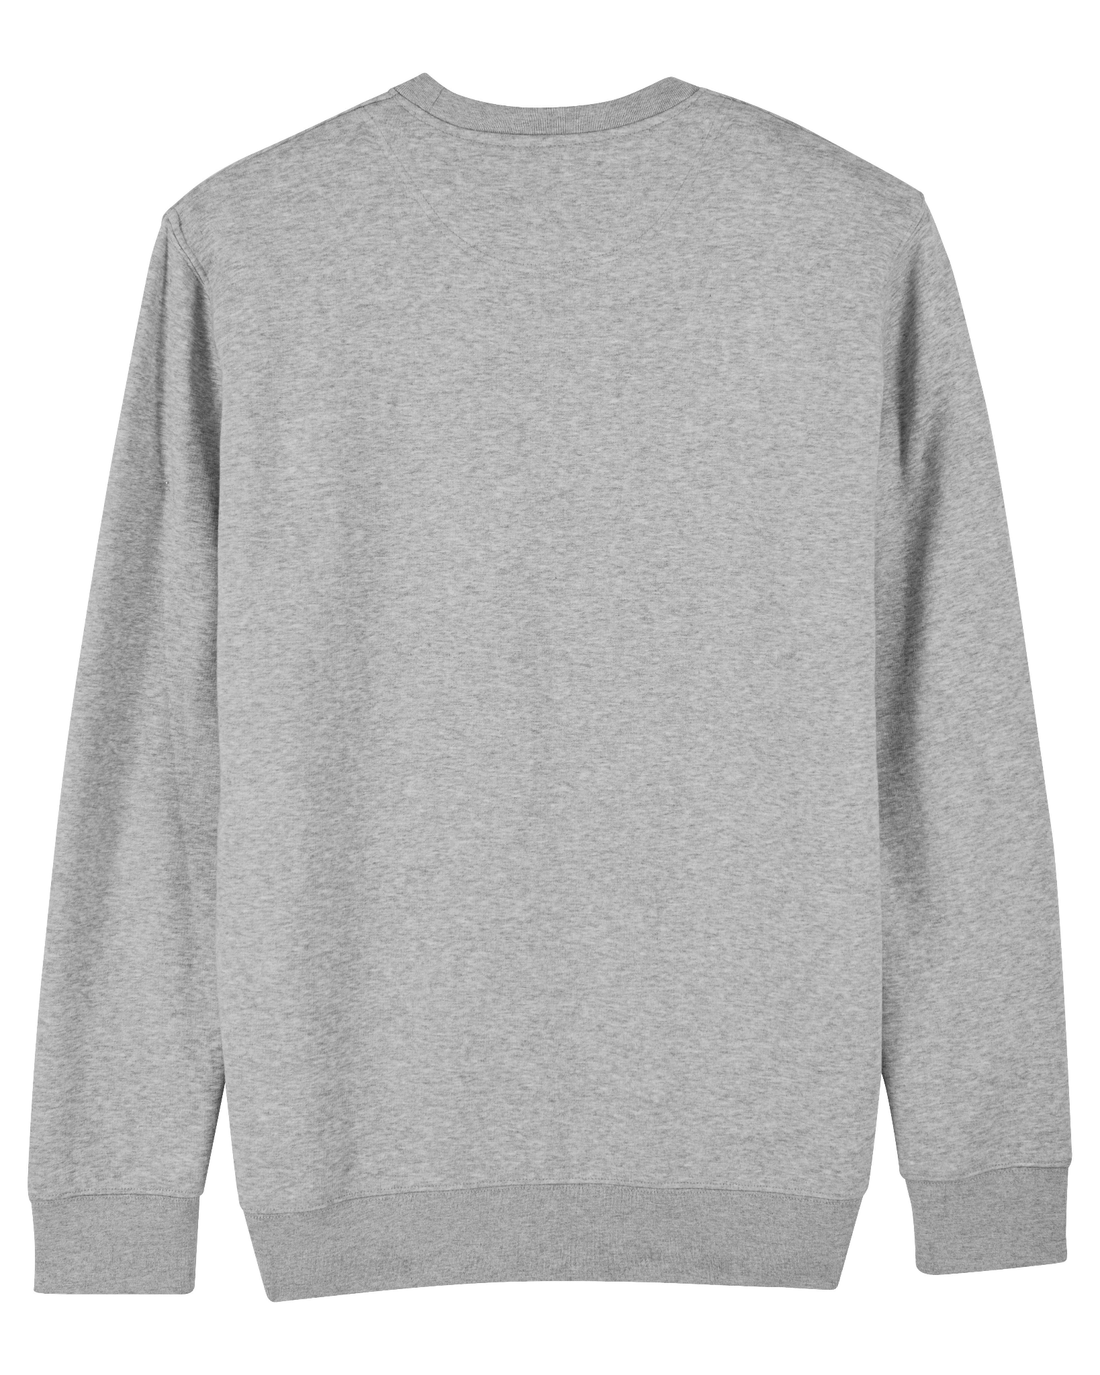 Grey Skater Sweatshirt, Supply Back Print